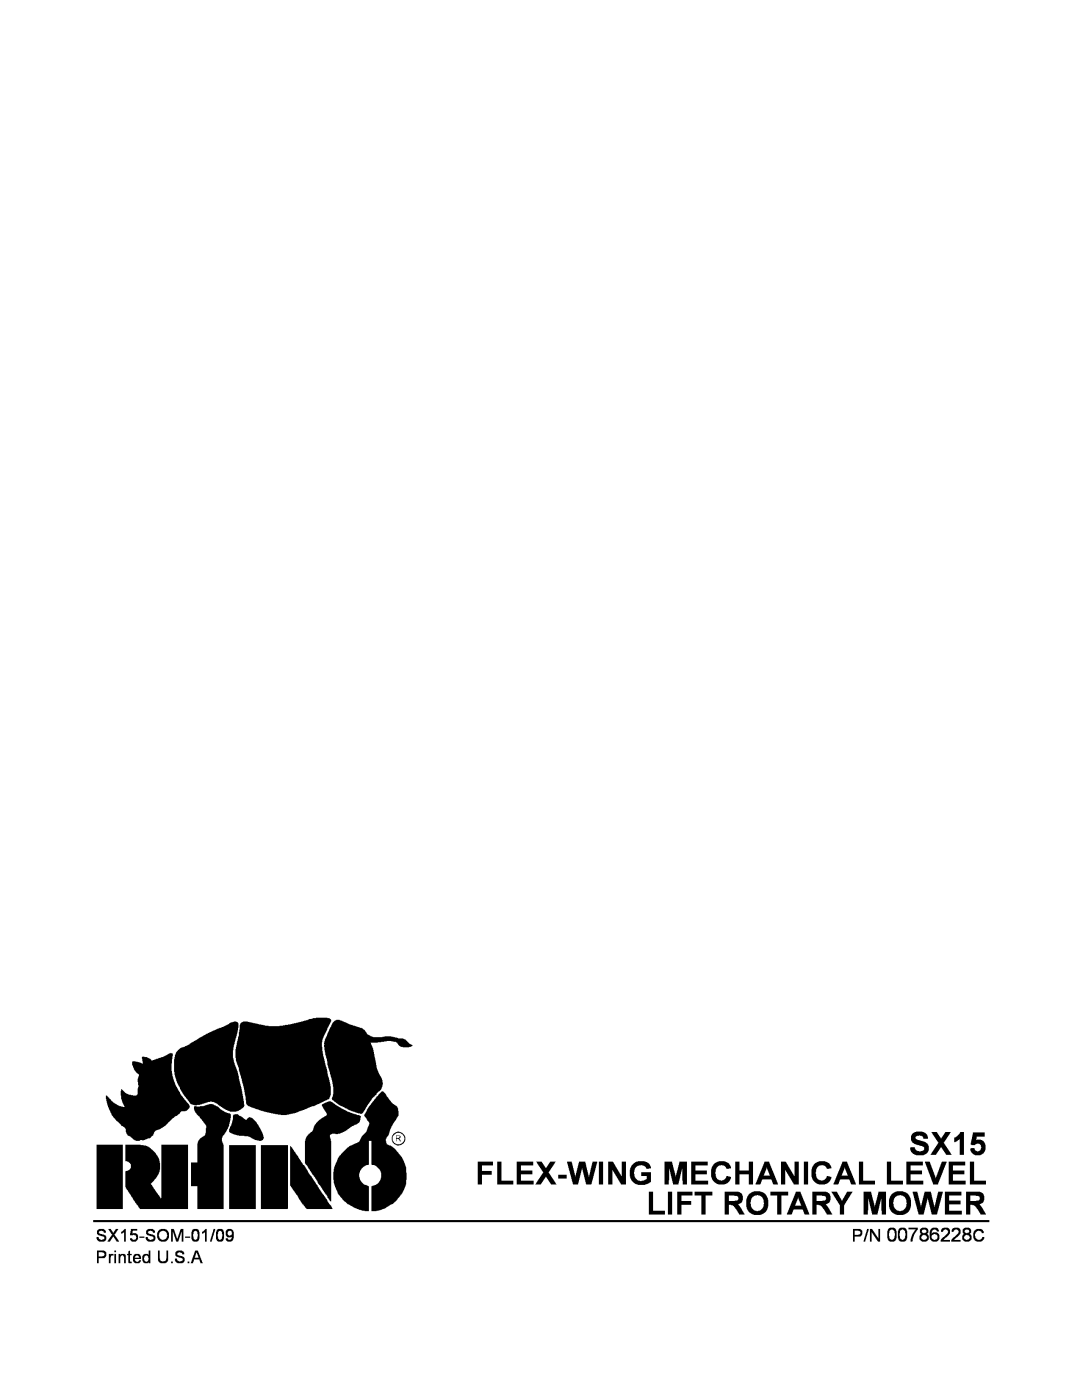 Alamo manual SX15 FLEX-WING MECHANICAL LEVEL LIFT ROTARY MOWER, P/N 00786228C 